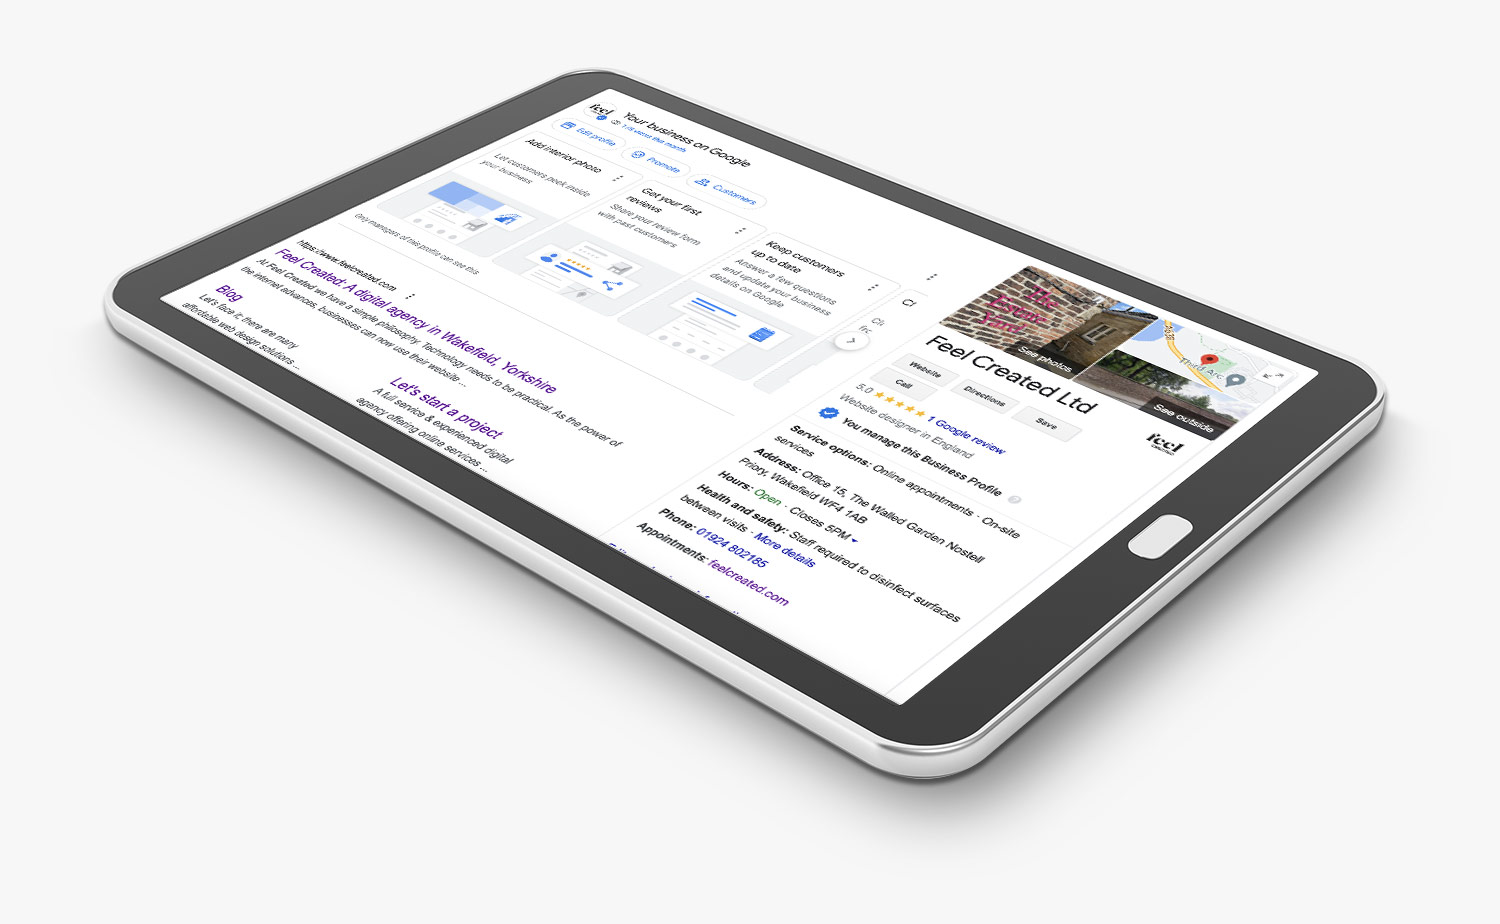 Google SERP in iPad